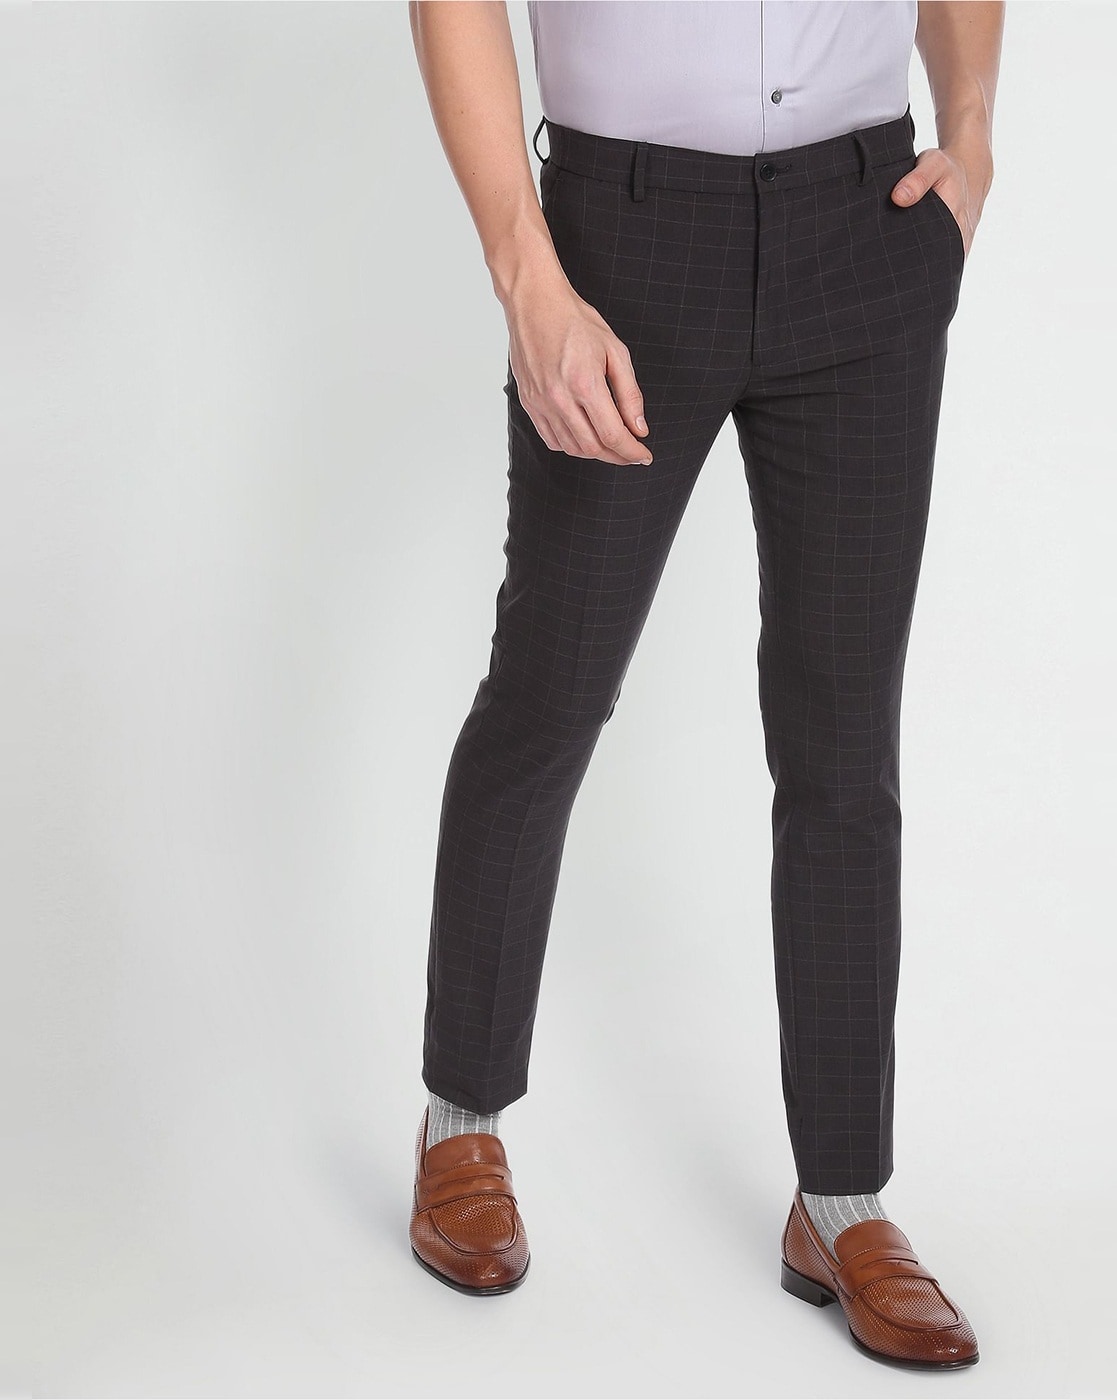 Buy Grey Trousers & Pants for Men by ARROW Online